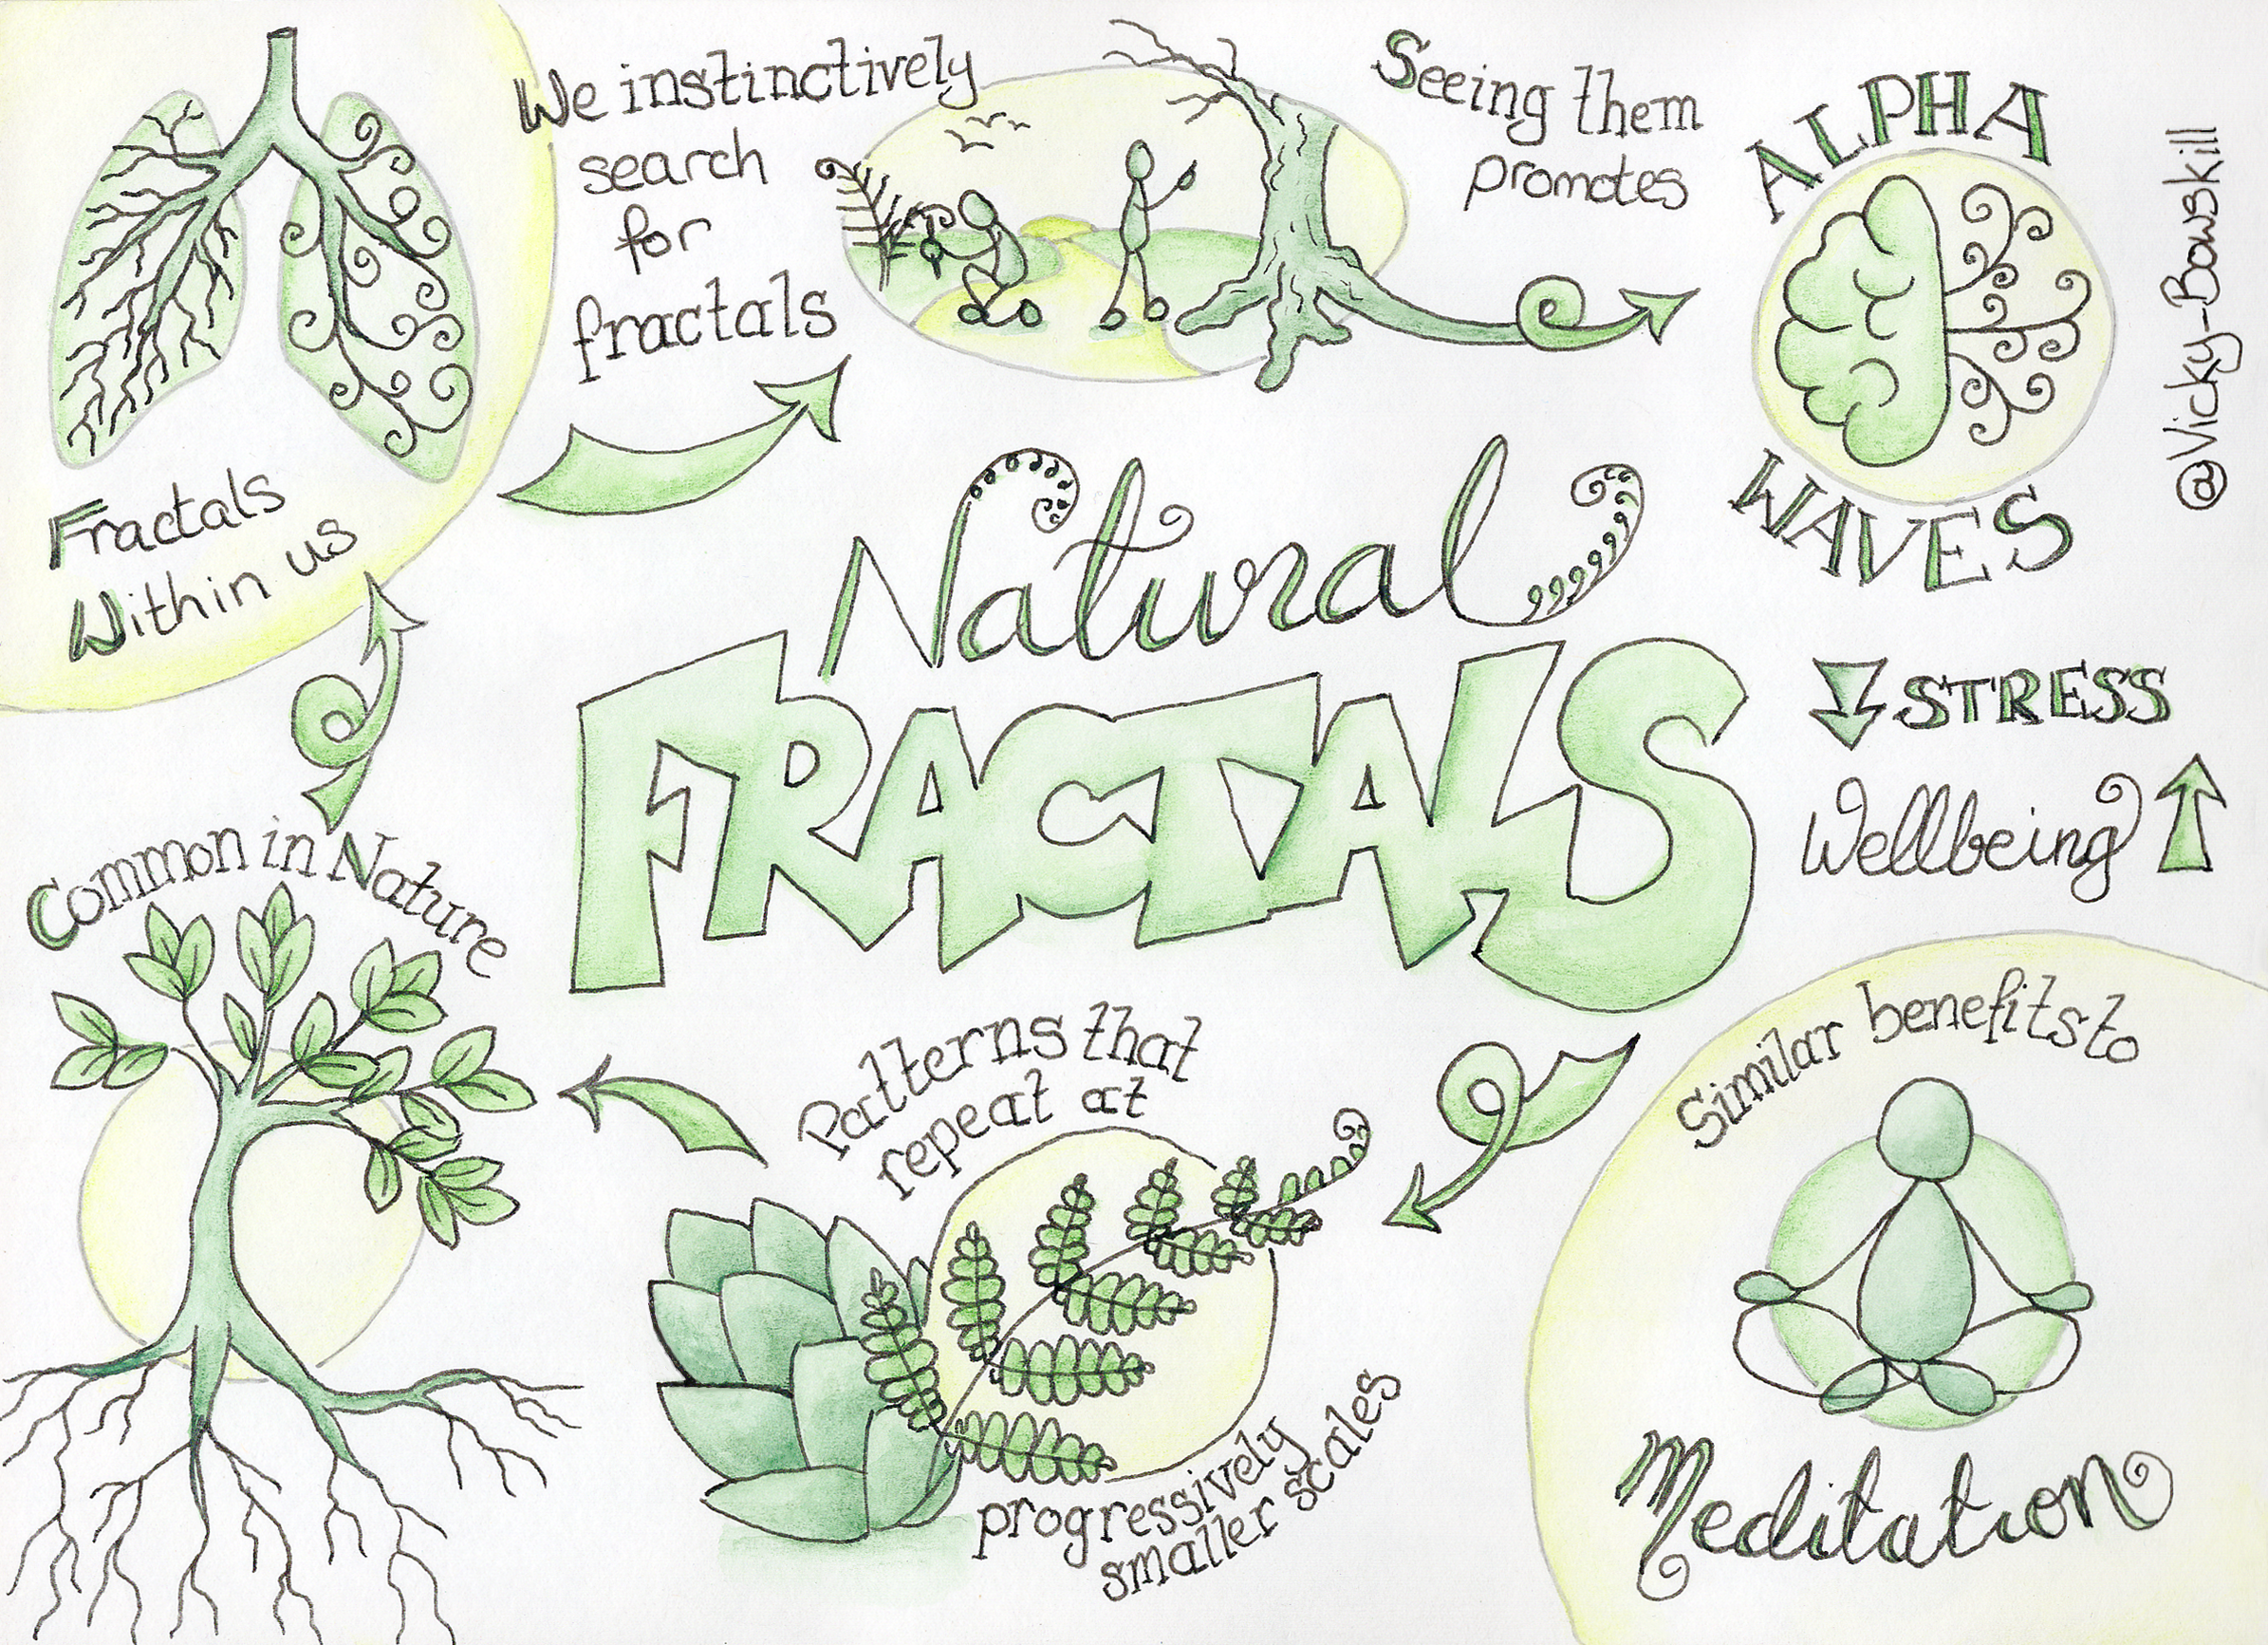 Three sketchnotes summarising the benefits of fractals. By Vicky Bowskill